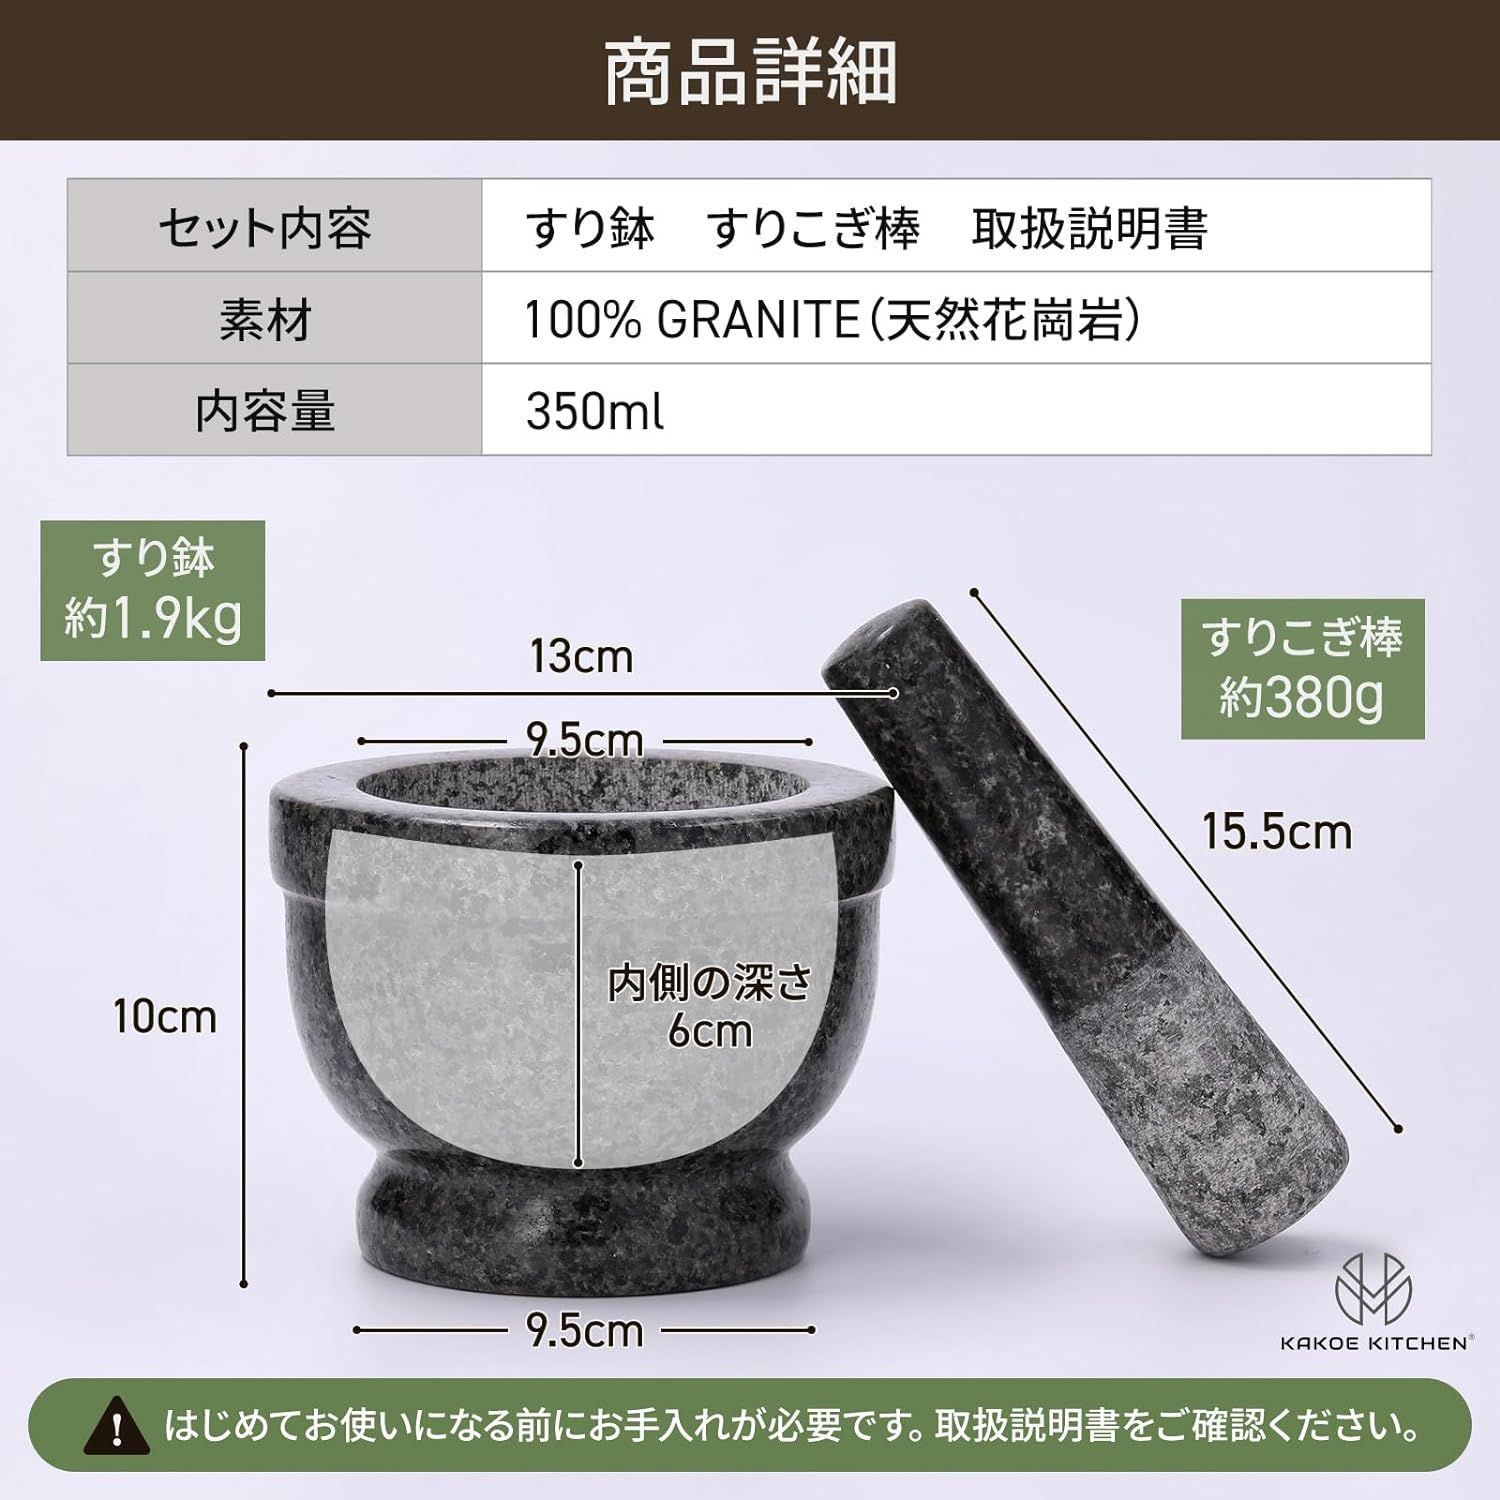 Kakoe Kitchen - すり鉢 すりこぎ棒 セット - Granite Mortar and 